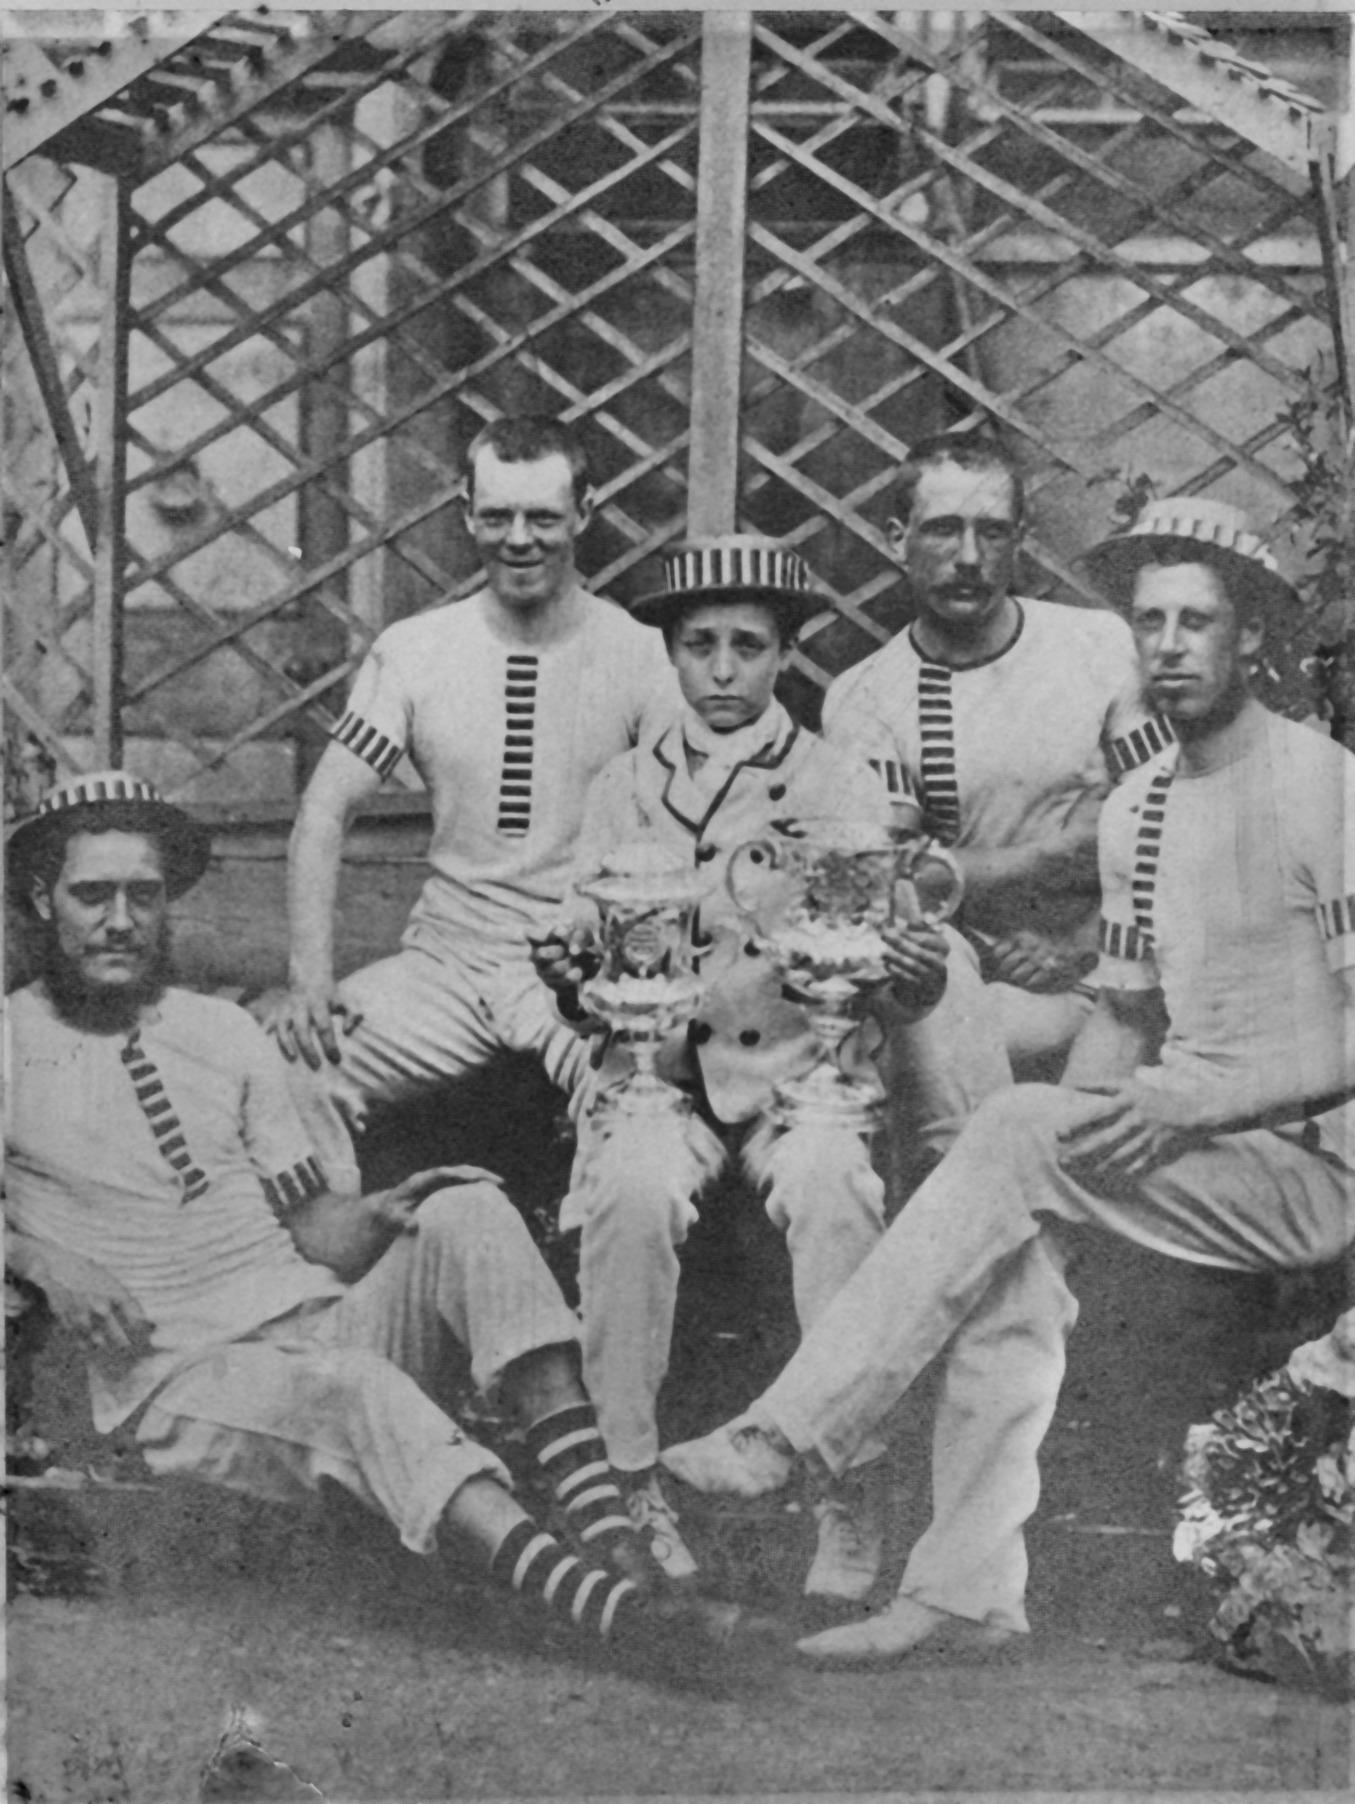 Wyfold Challenge Cup winners, 1870